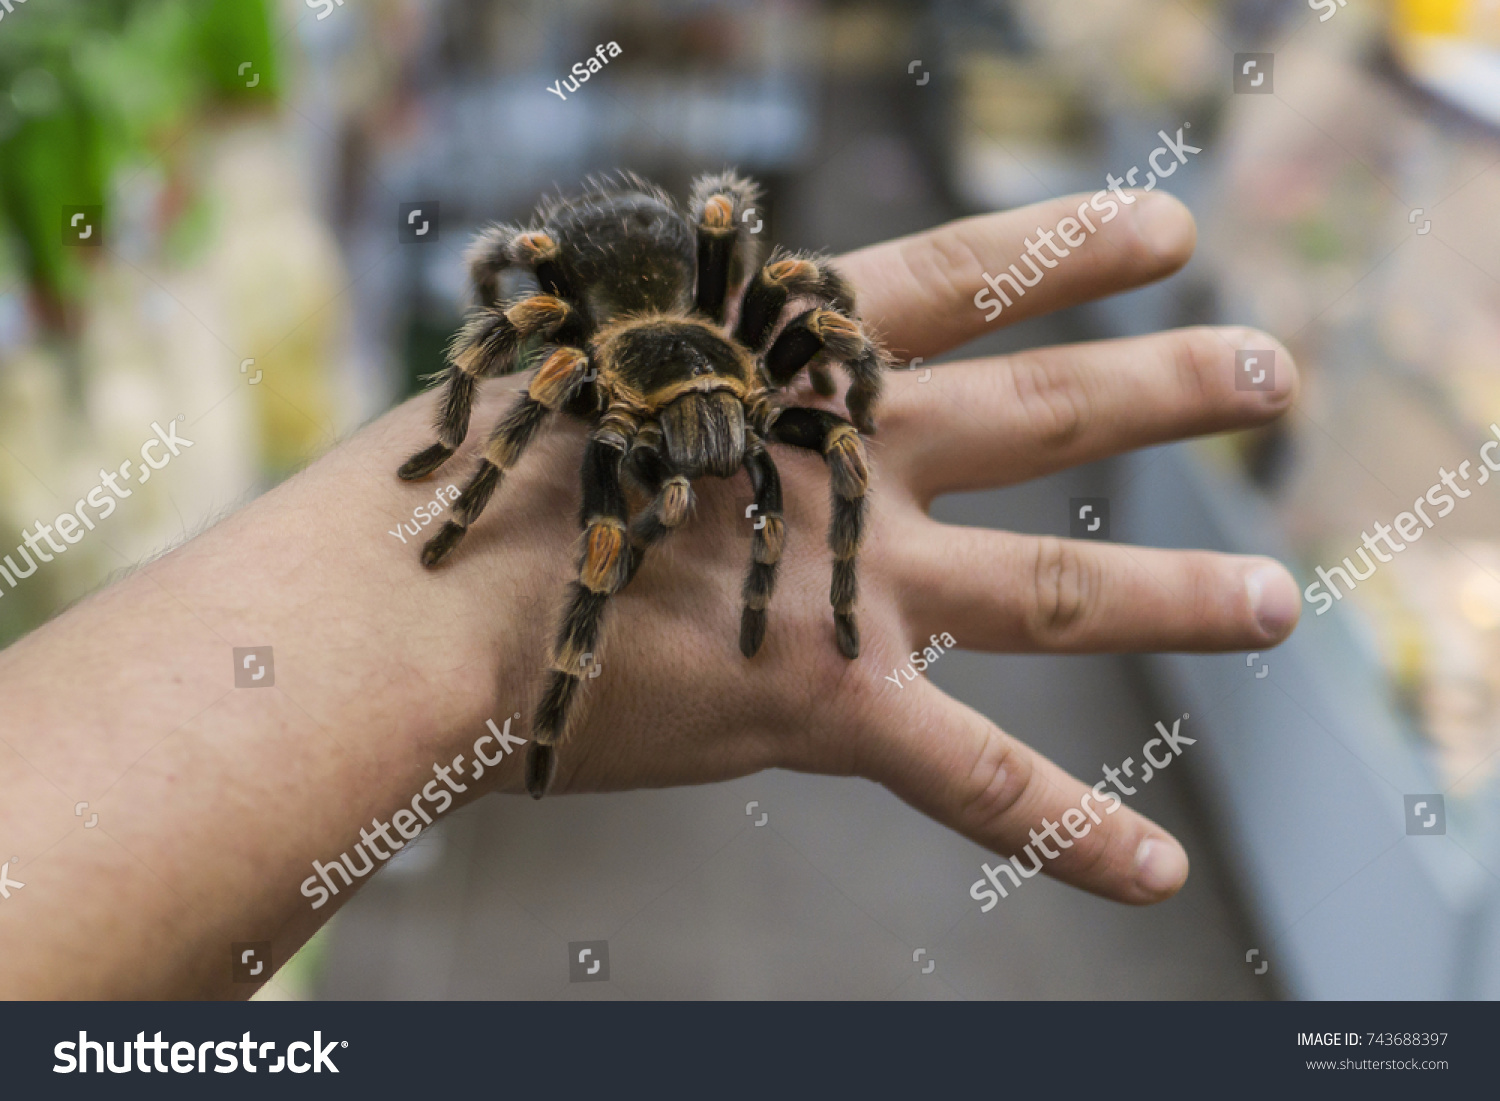 big spider tarantula sits crawling on the man's arm #743688397